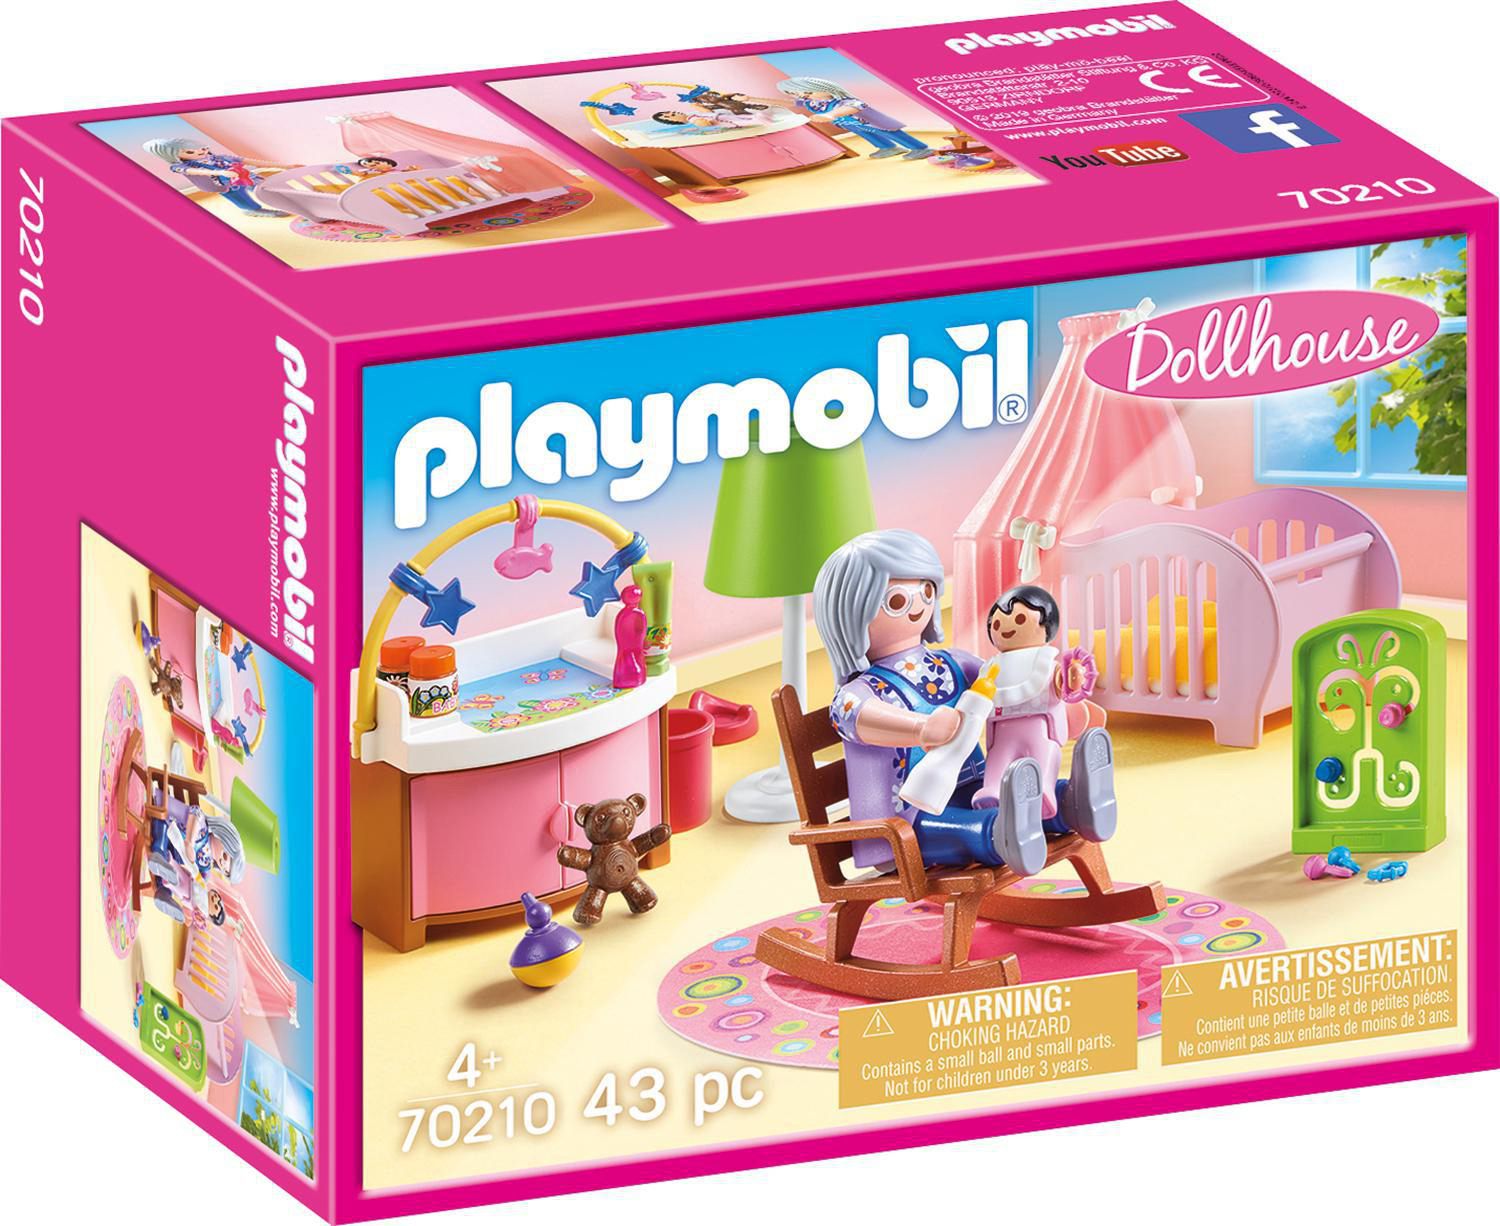 PLAYMOBIL 70210 Babyzimmer Spielset, Mehrfarbig